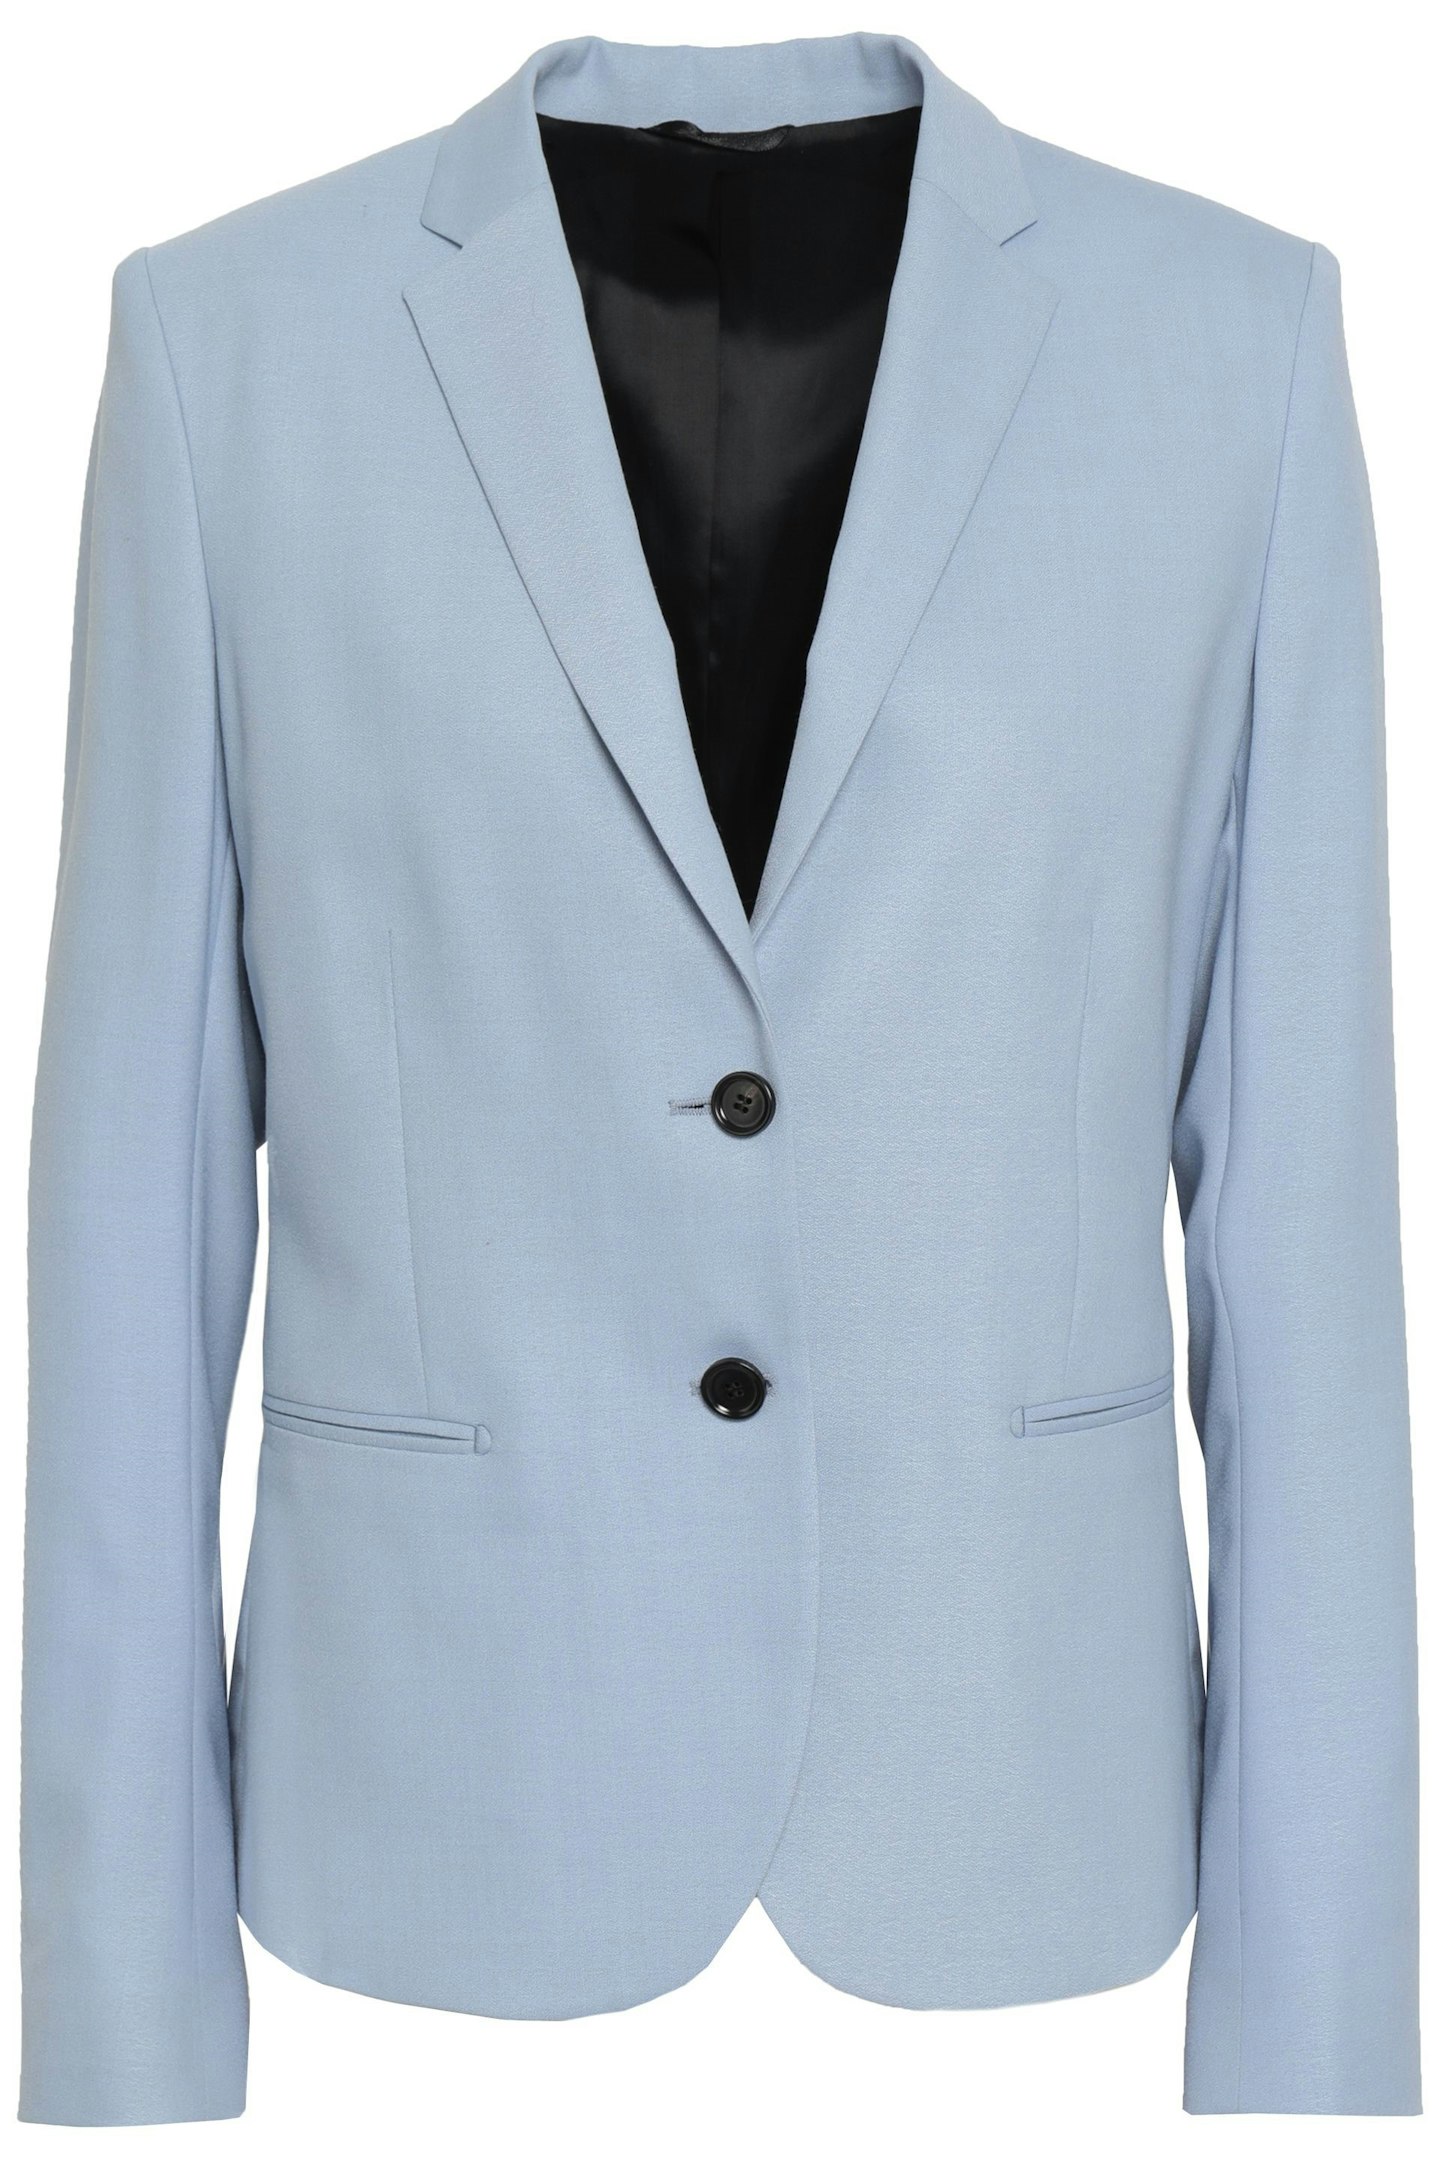 Filippa L, Tailored Suit Jacket, £210